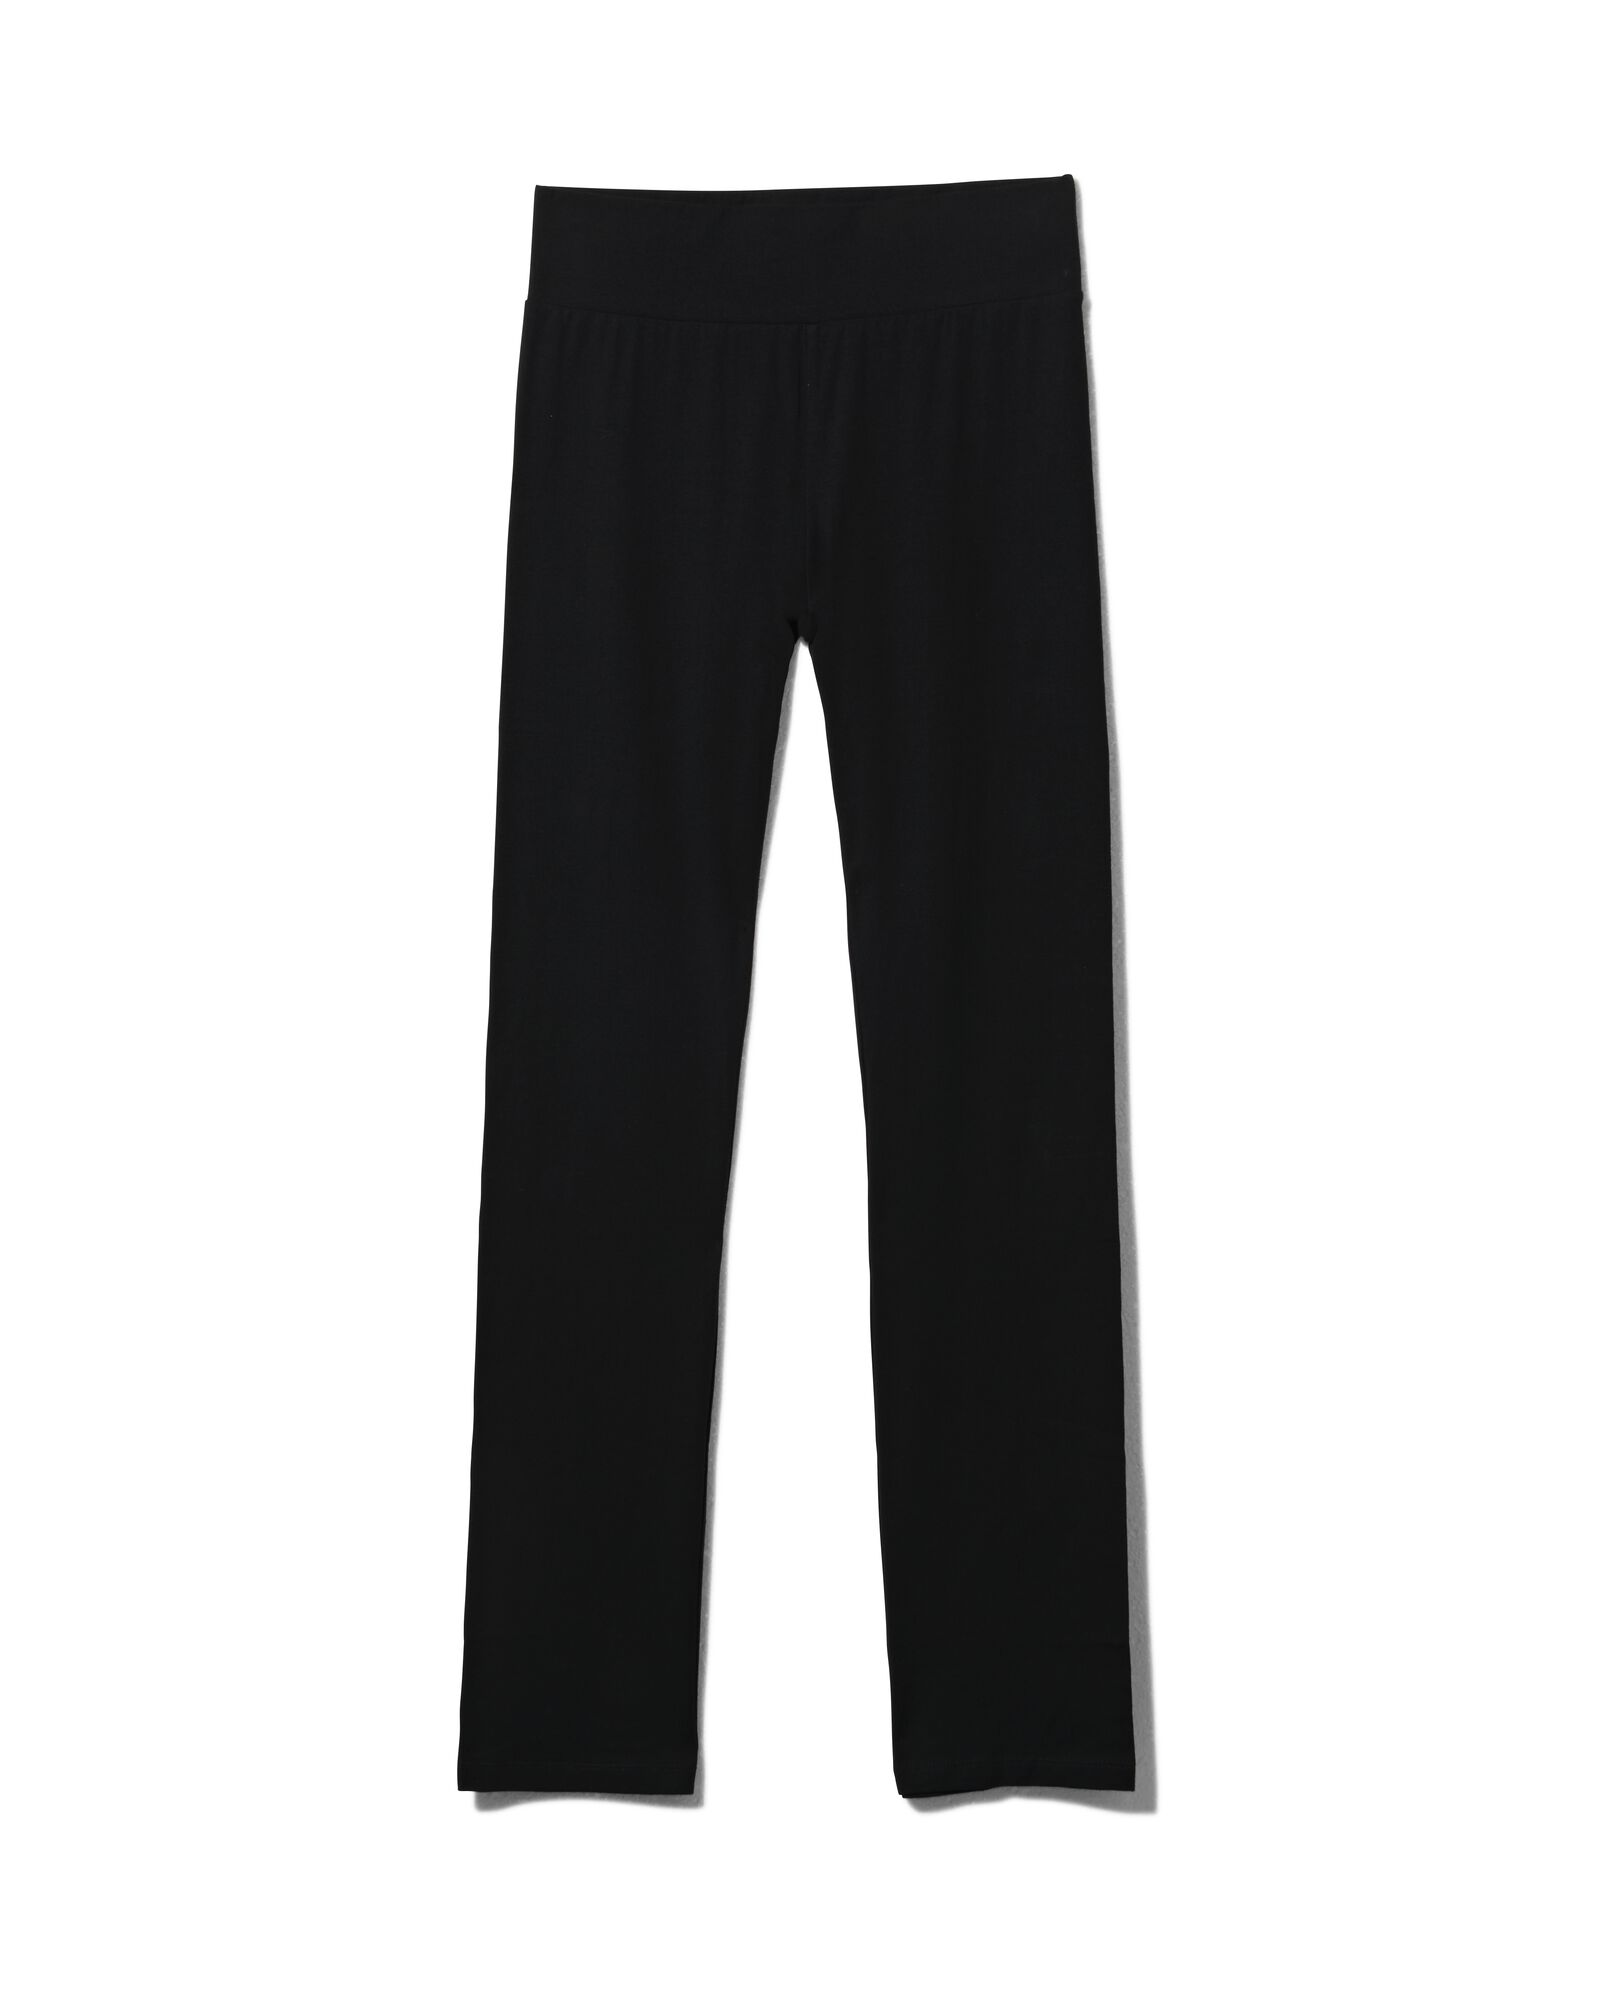 Damen-Yoga-Sporthose schwarz M - 36089302 - HEMA